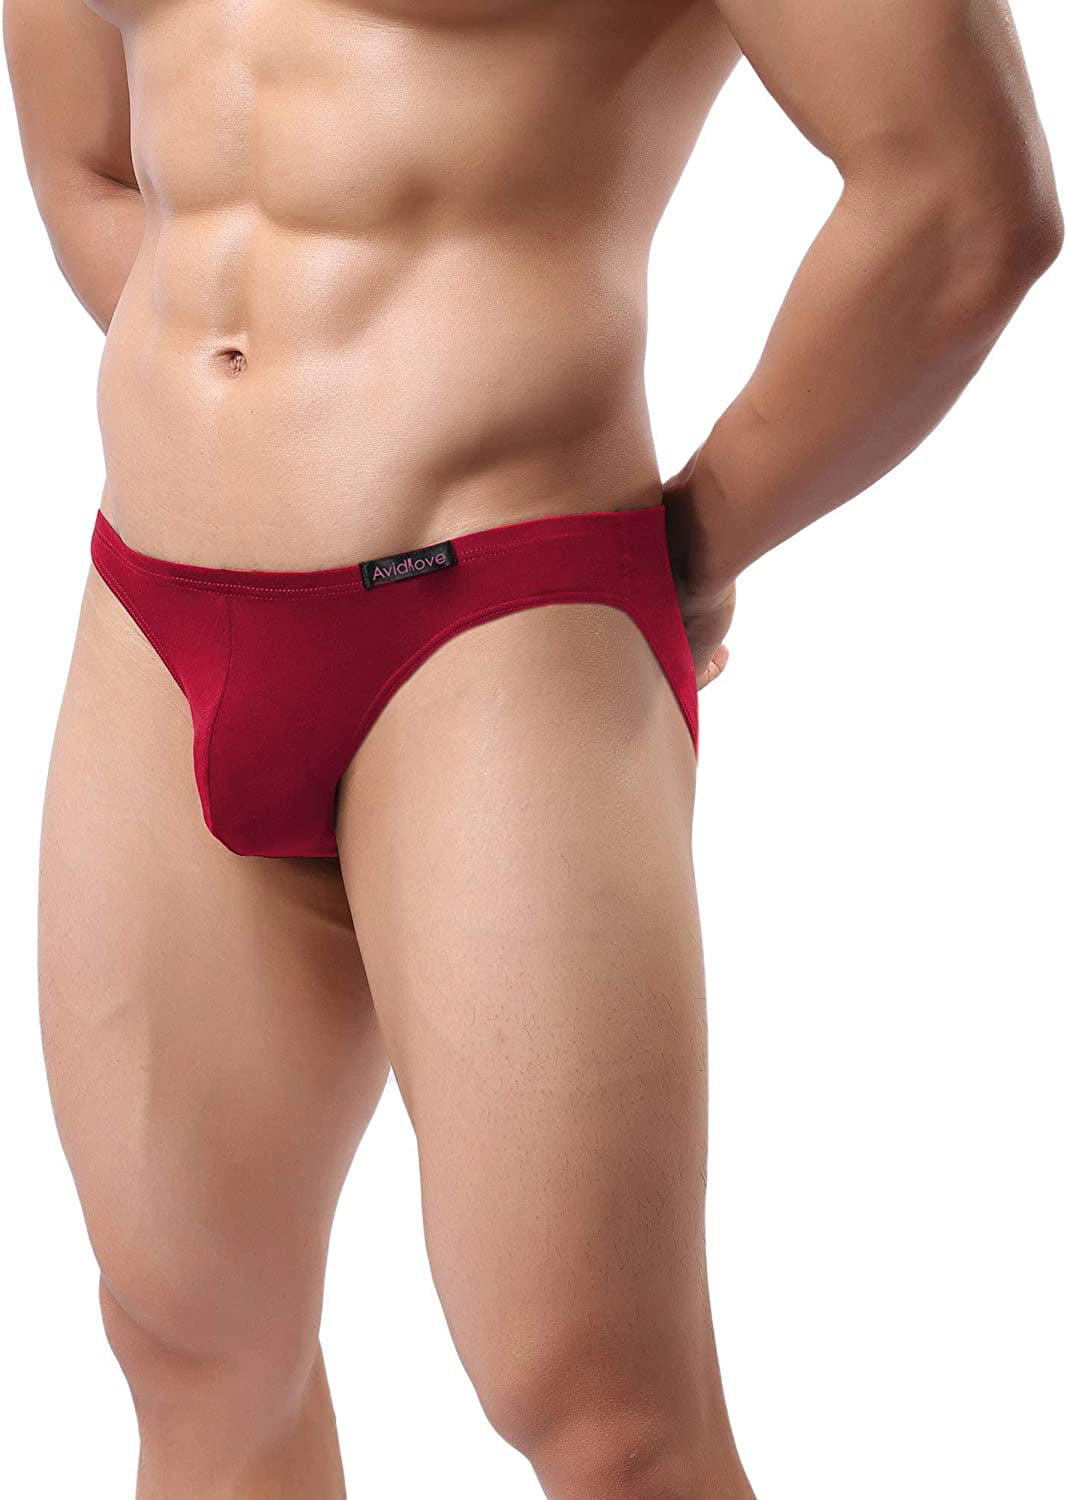 Avidlove Low Rise Briefs for Men Mens Underwear Bikini Briefs 4